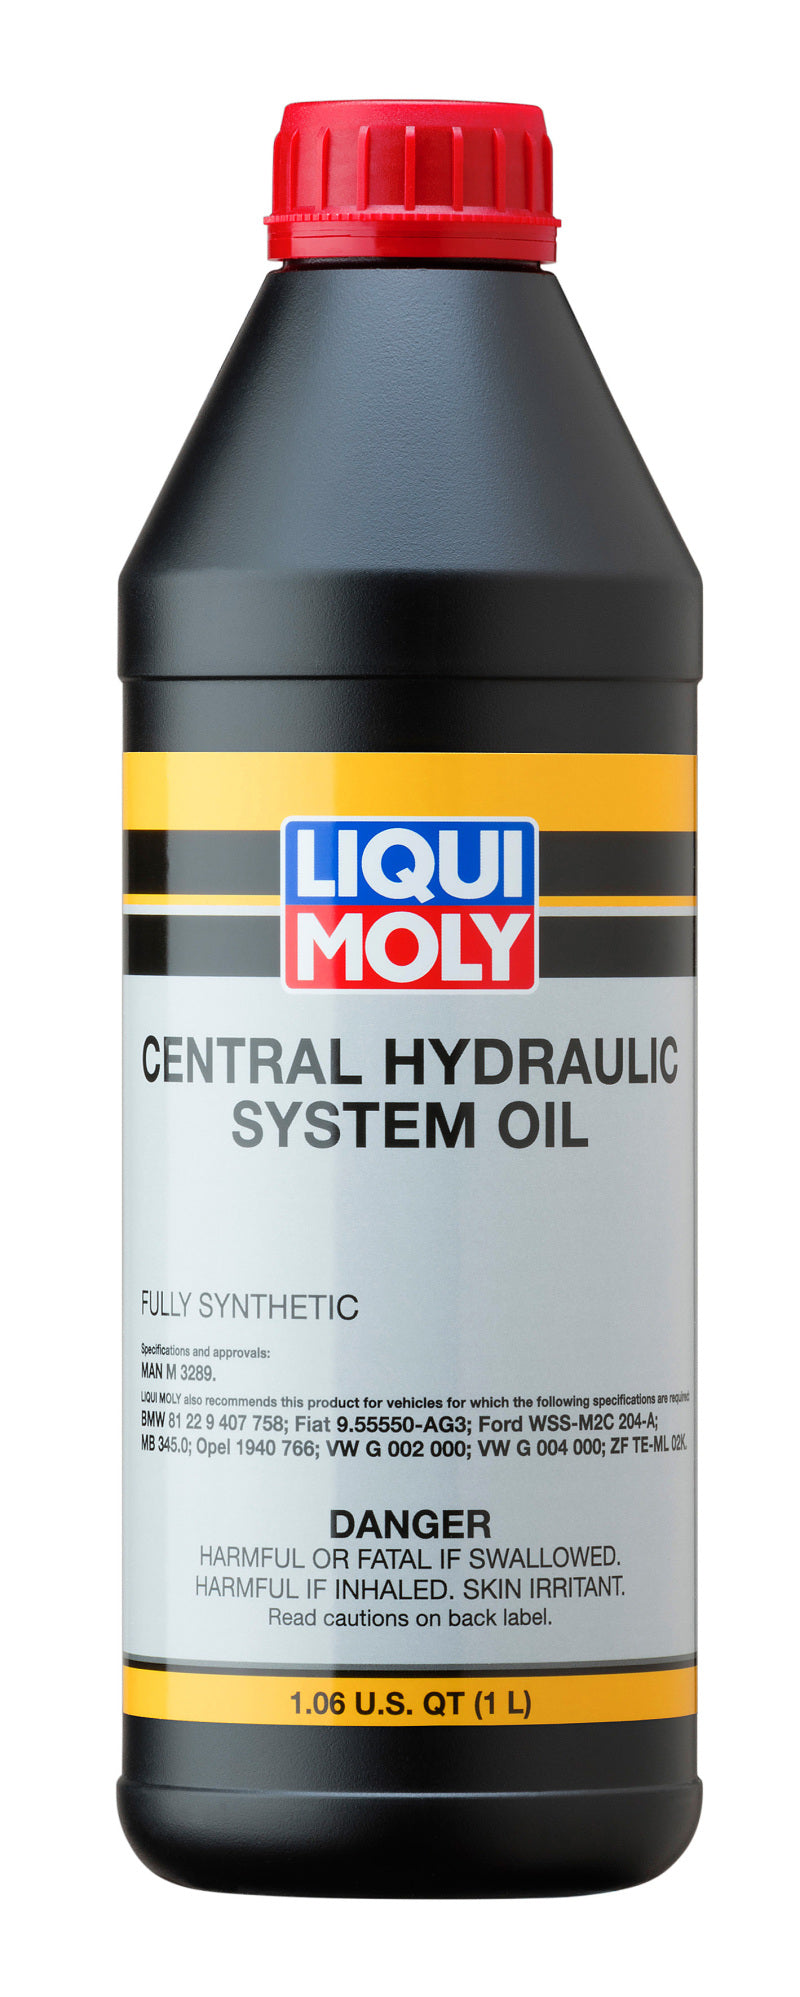 LIQUI MOLY 1L Central Hydraulic System Oil.